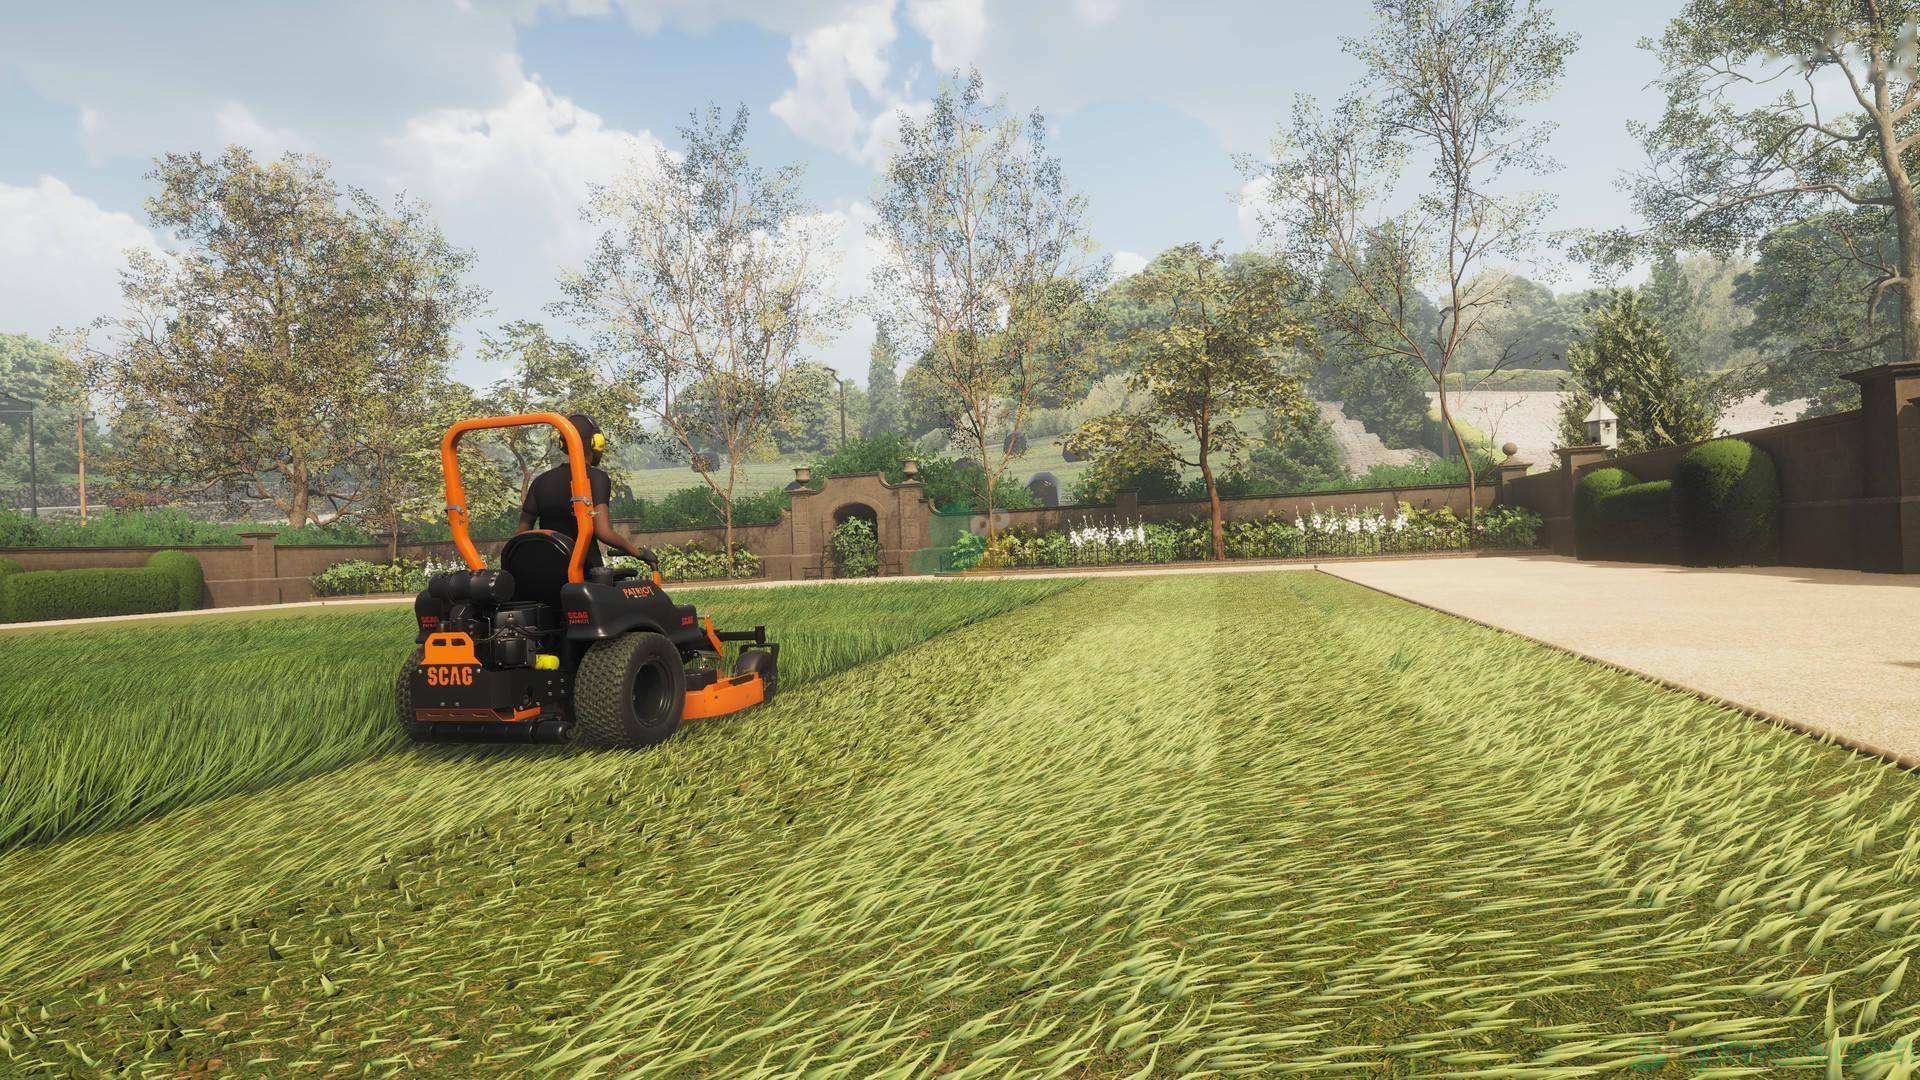 Epic商城7月28日《割草模拟器Lawn Mowing Simulator》免费领取地址